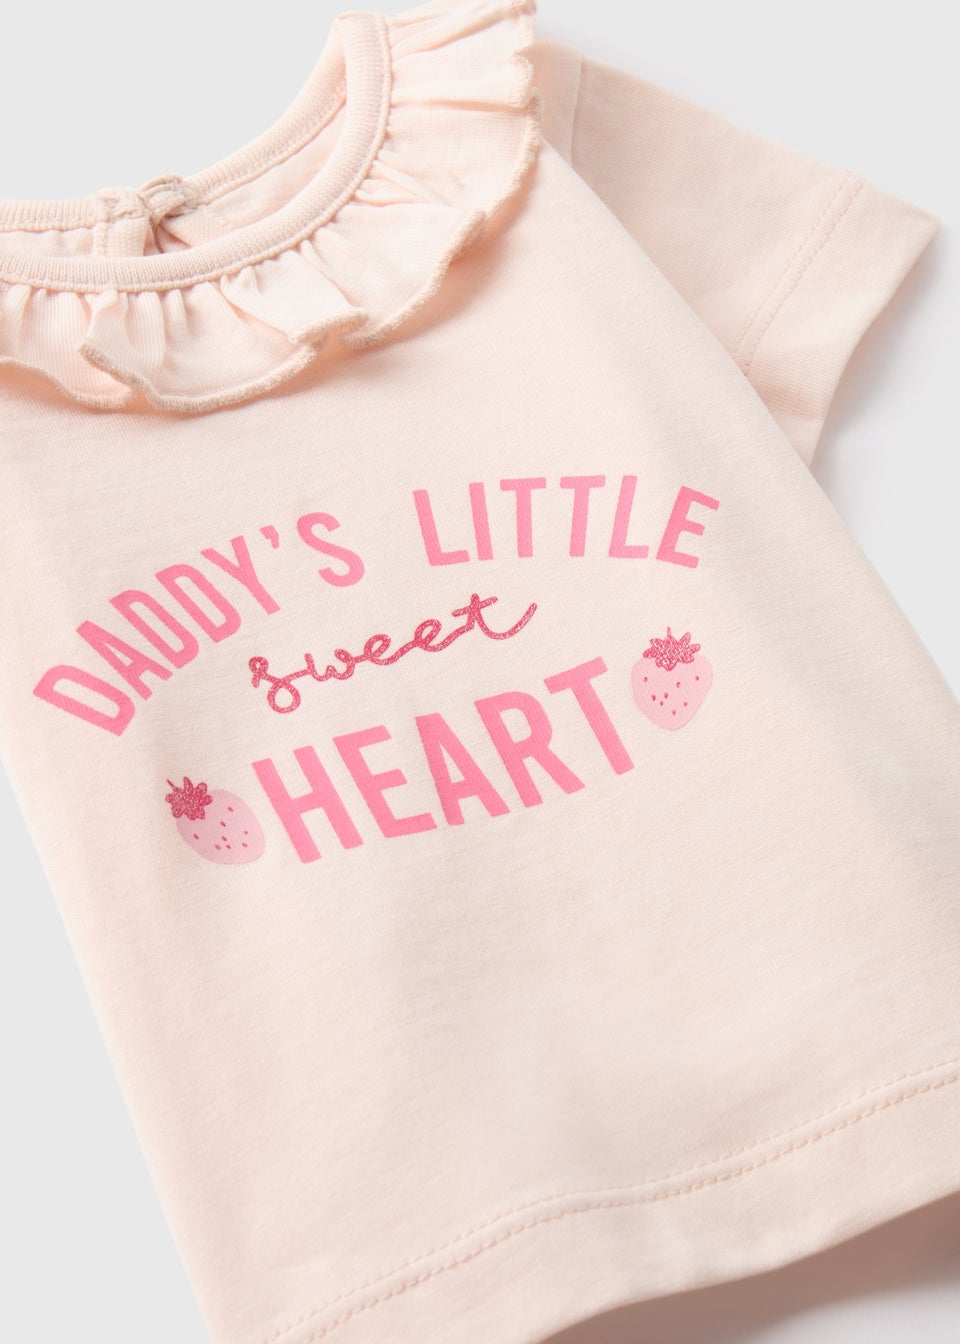 Baby Pink Daddy's Heart T-Shirt (Newborn-23mths)